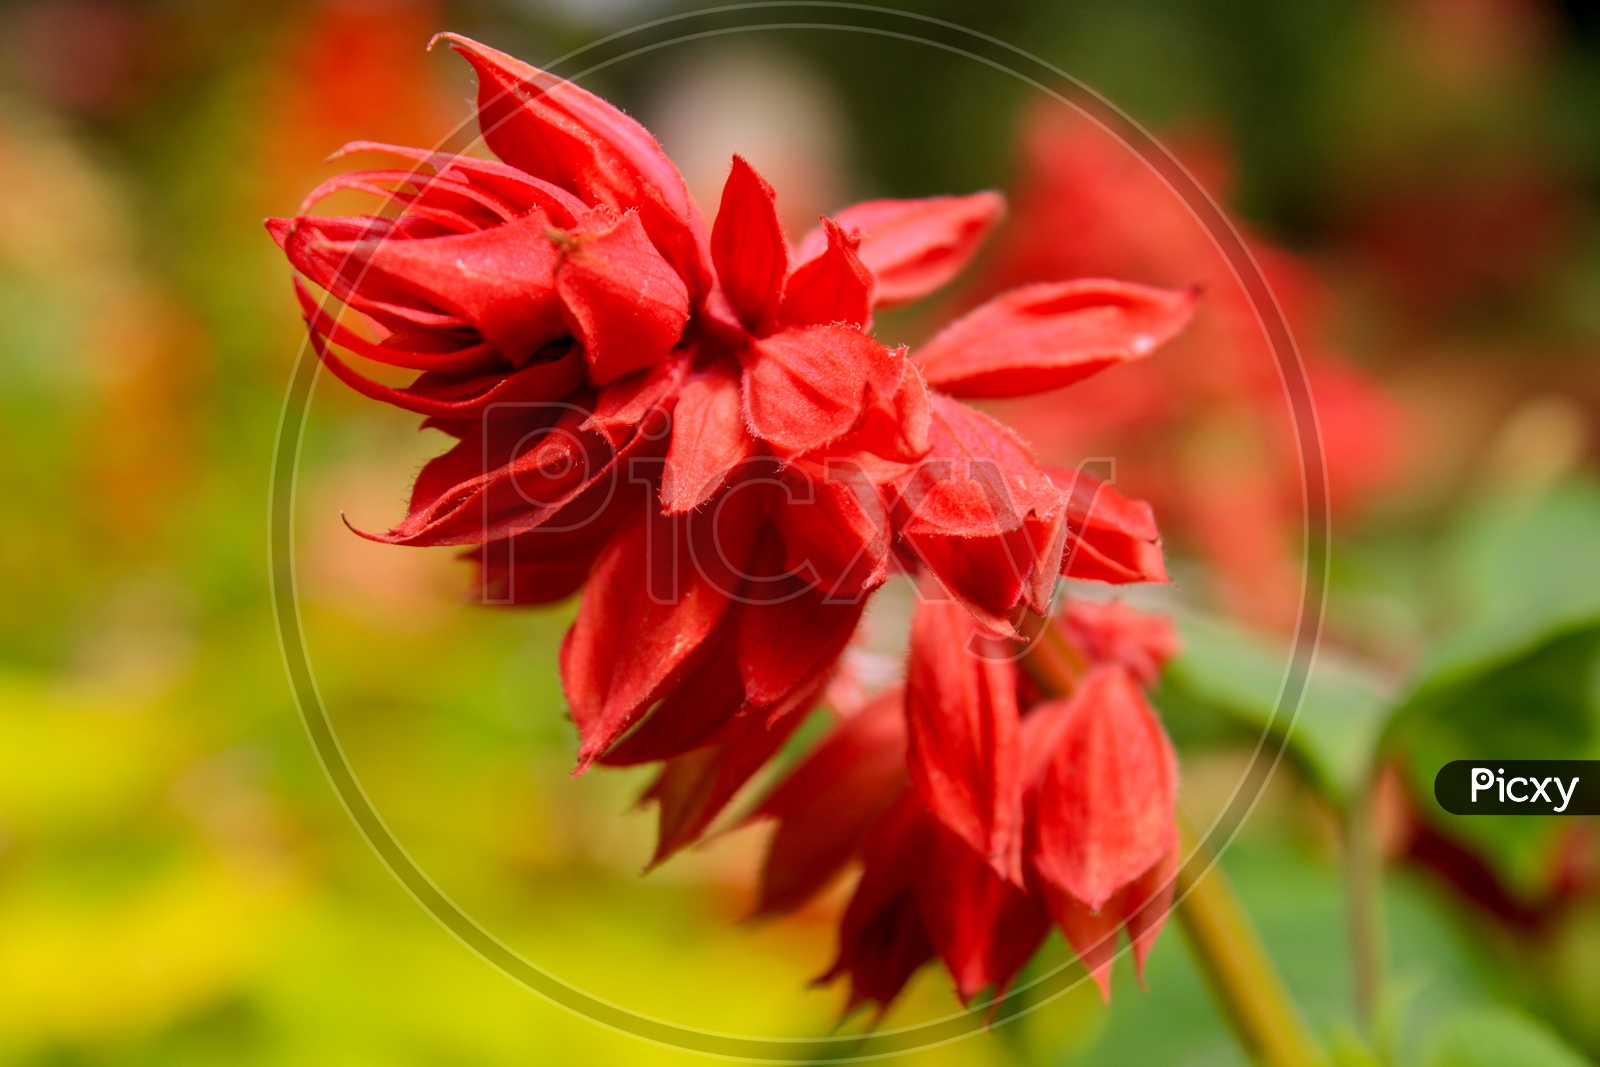 Red Salvia Flowers